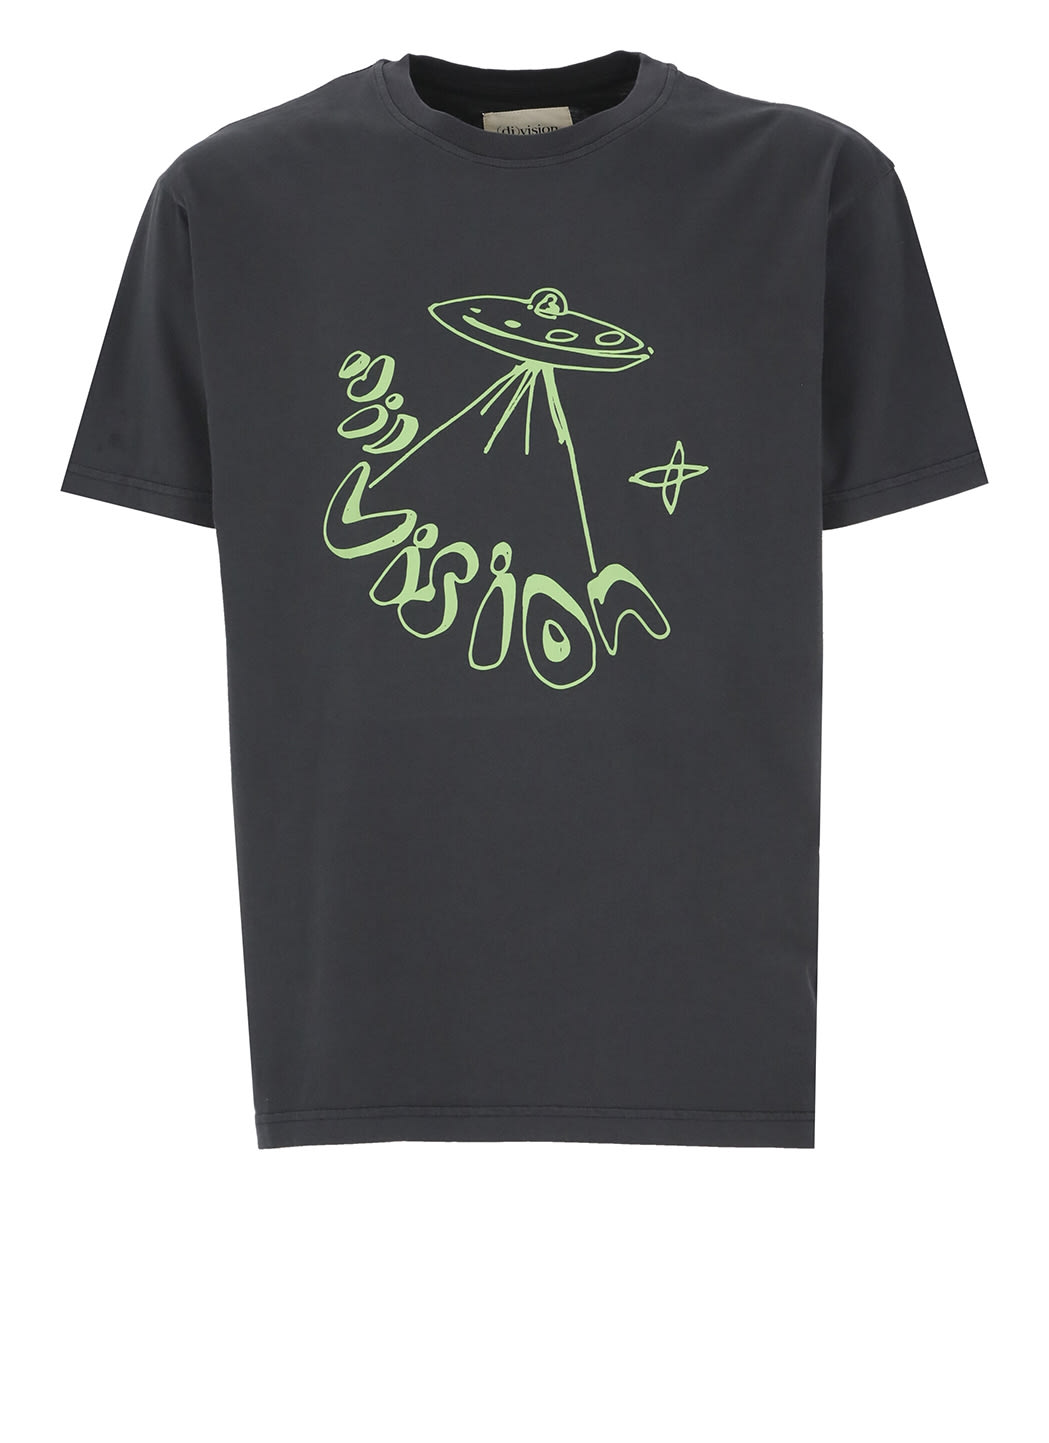 (di)vision Ufo T-shirt